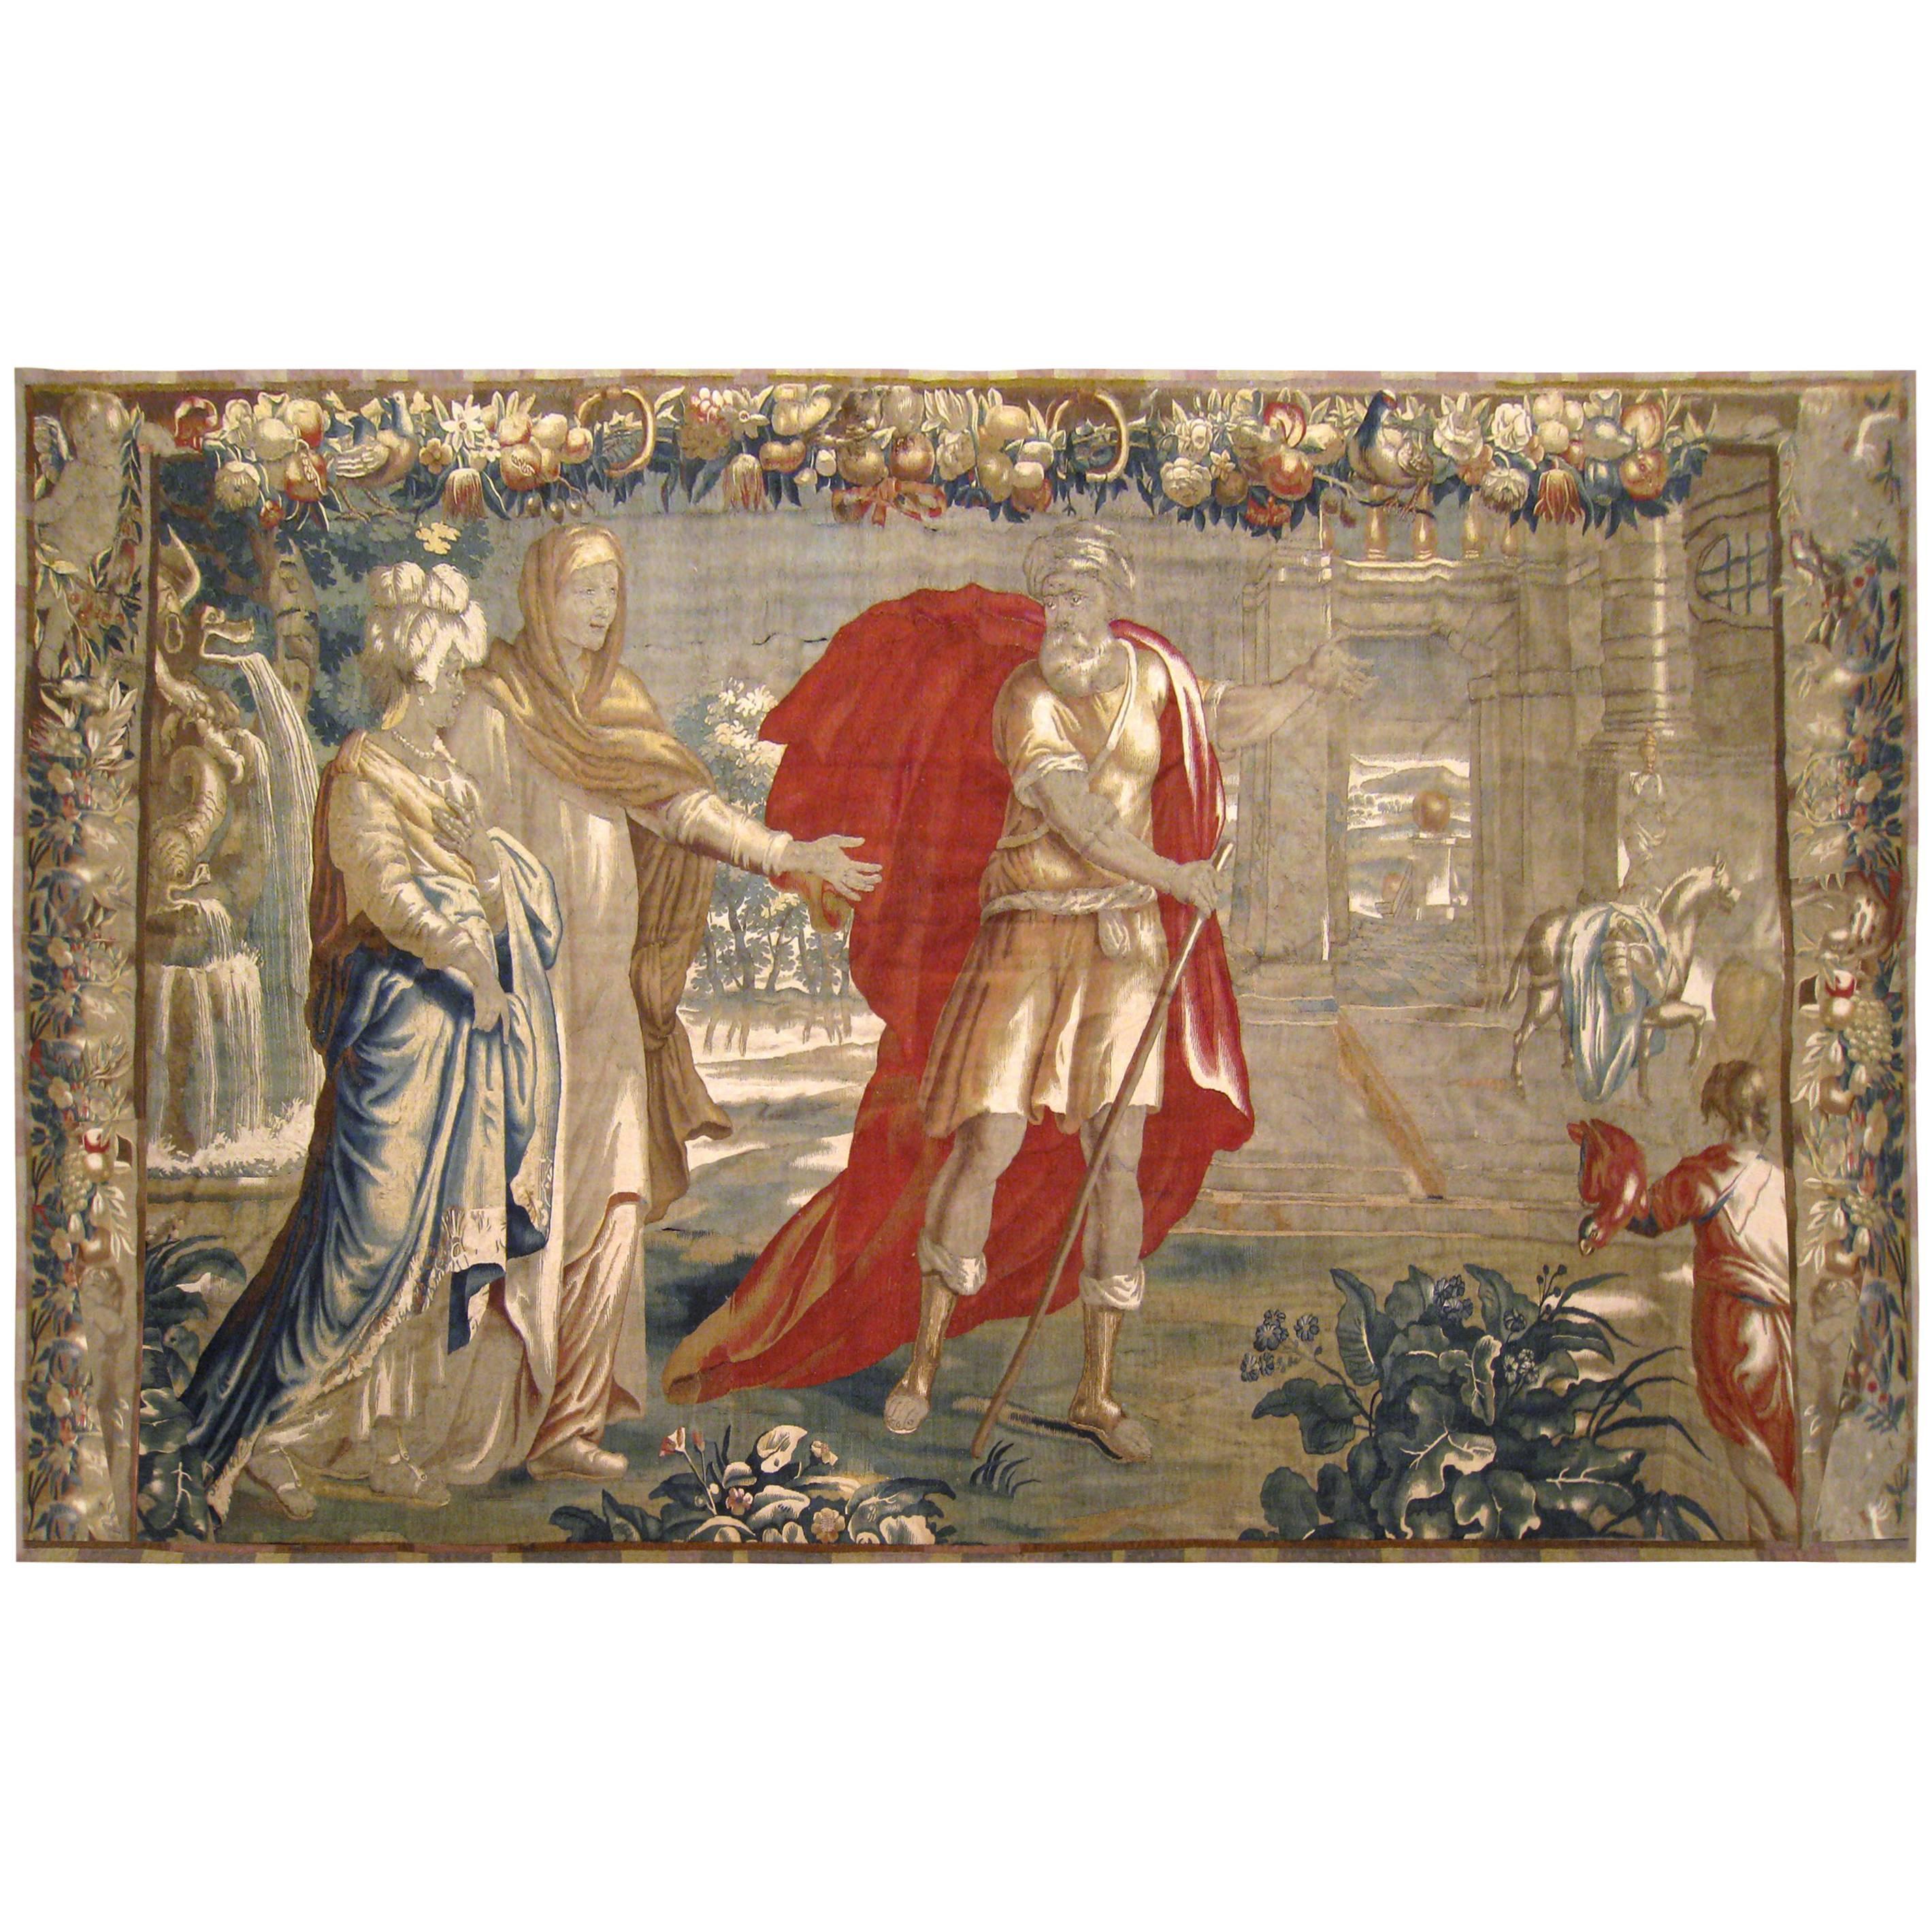 Antique 18th Century Flemish Historical Tapestry w/ the Roman General Coriolanus